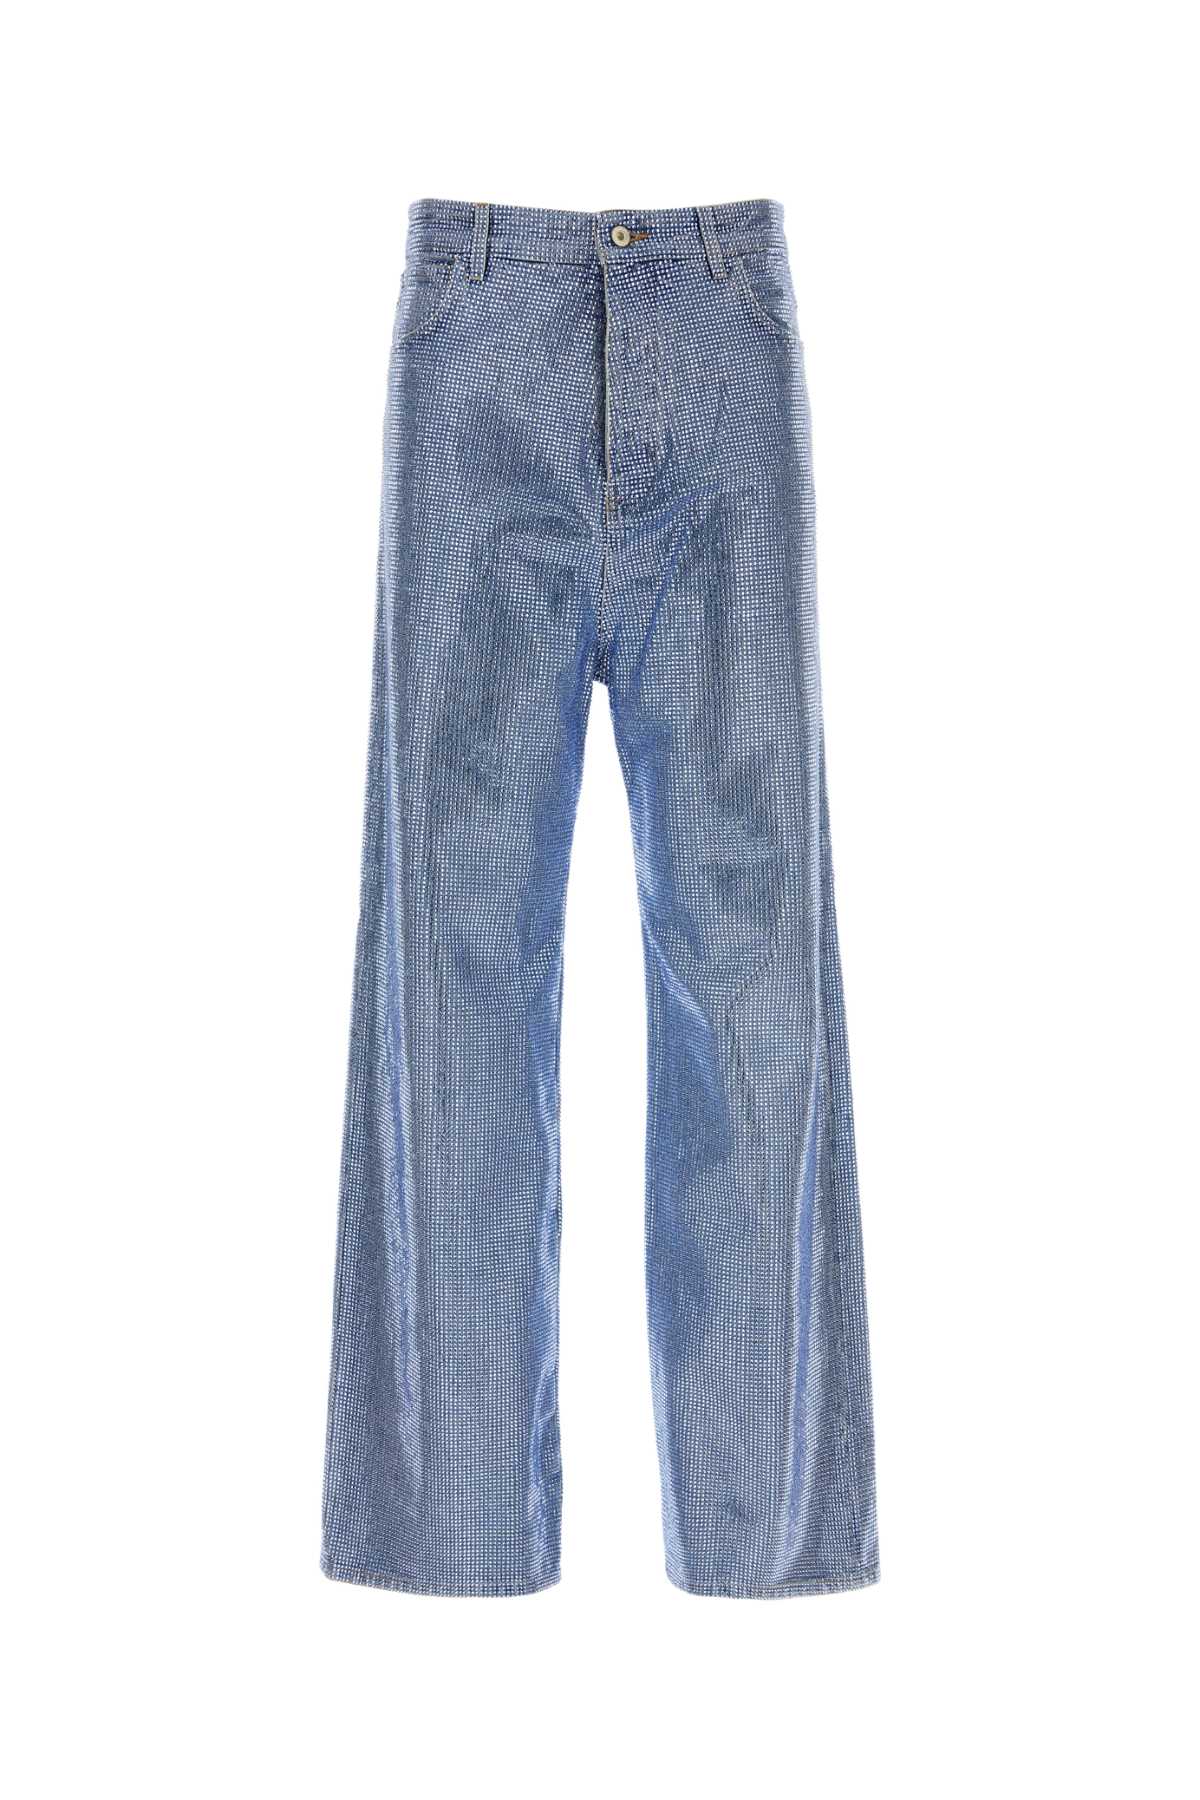 Loewe Embellished Denim Jeans